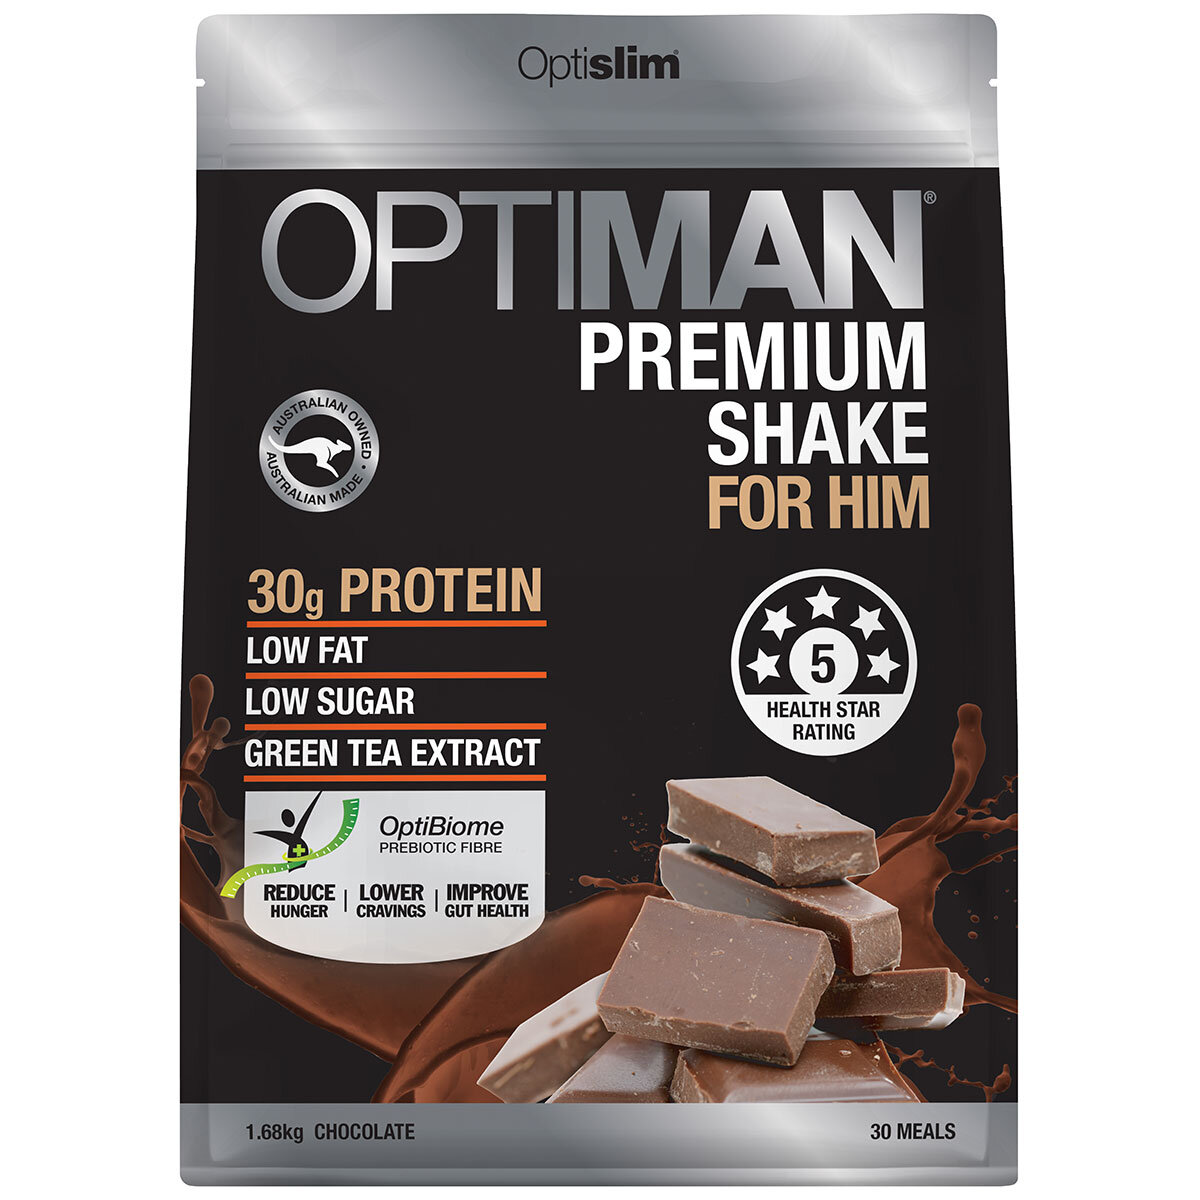 Optislim Optiman Premium Shake for Him 1.68kg Chocolate